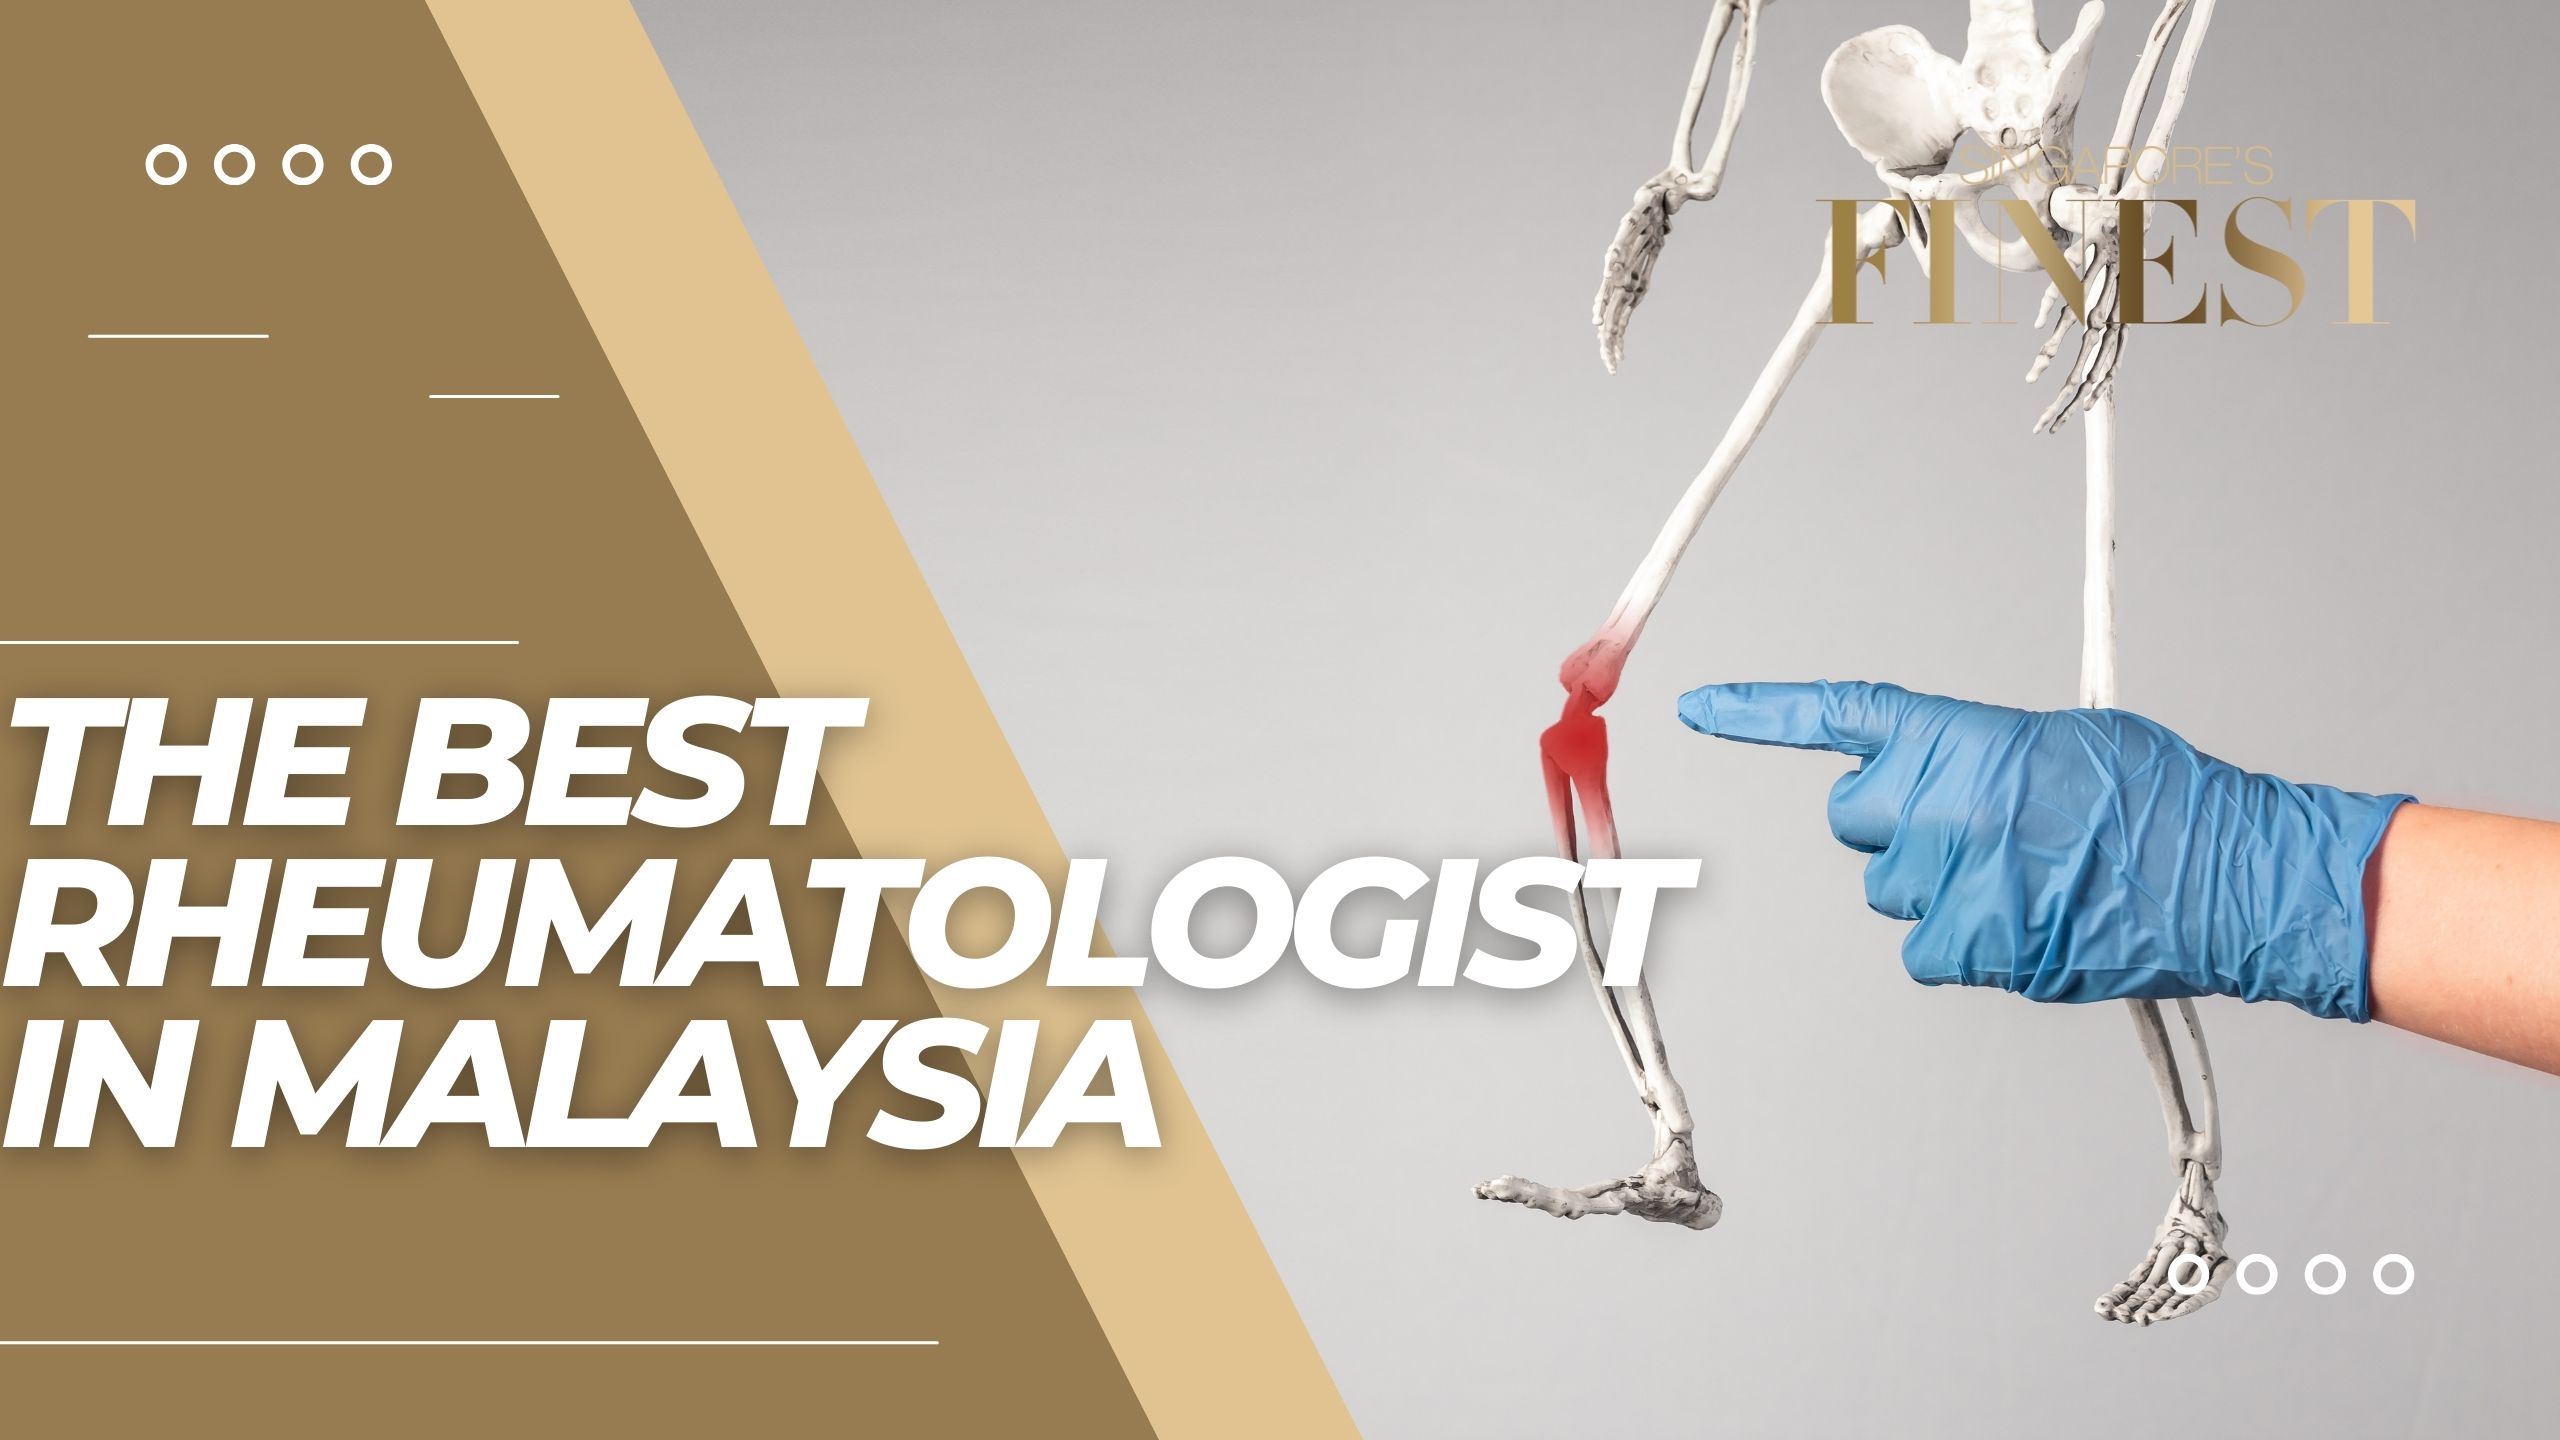 The Finest Rheumatologists in Malaysia